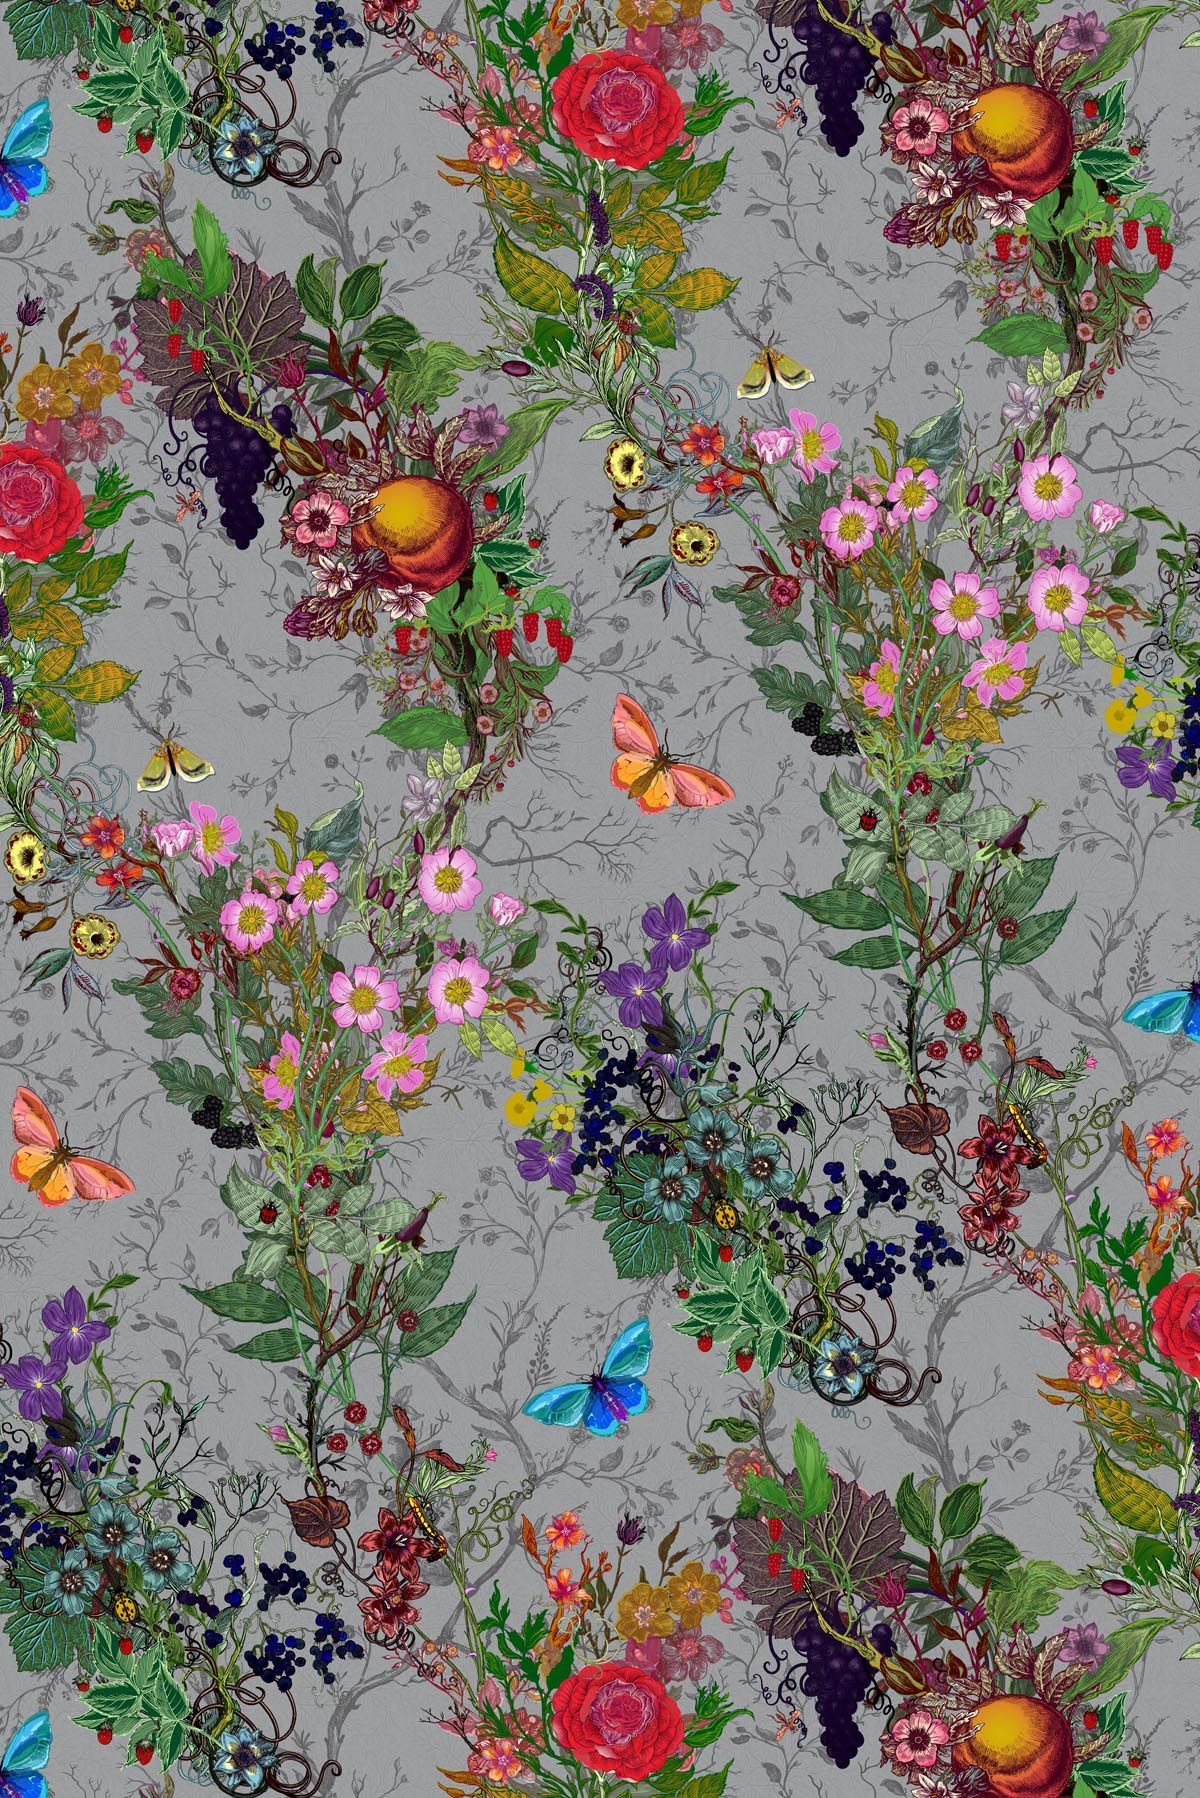 floral wallpaper australia,flower,wildflower,plant,floral design,textile